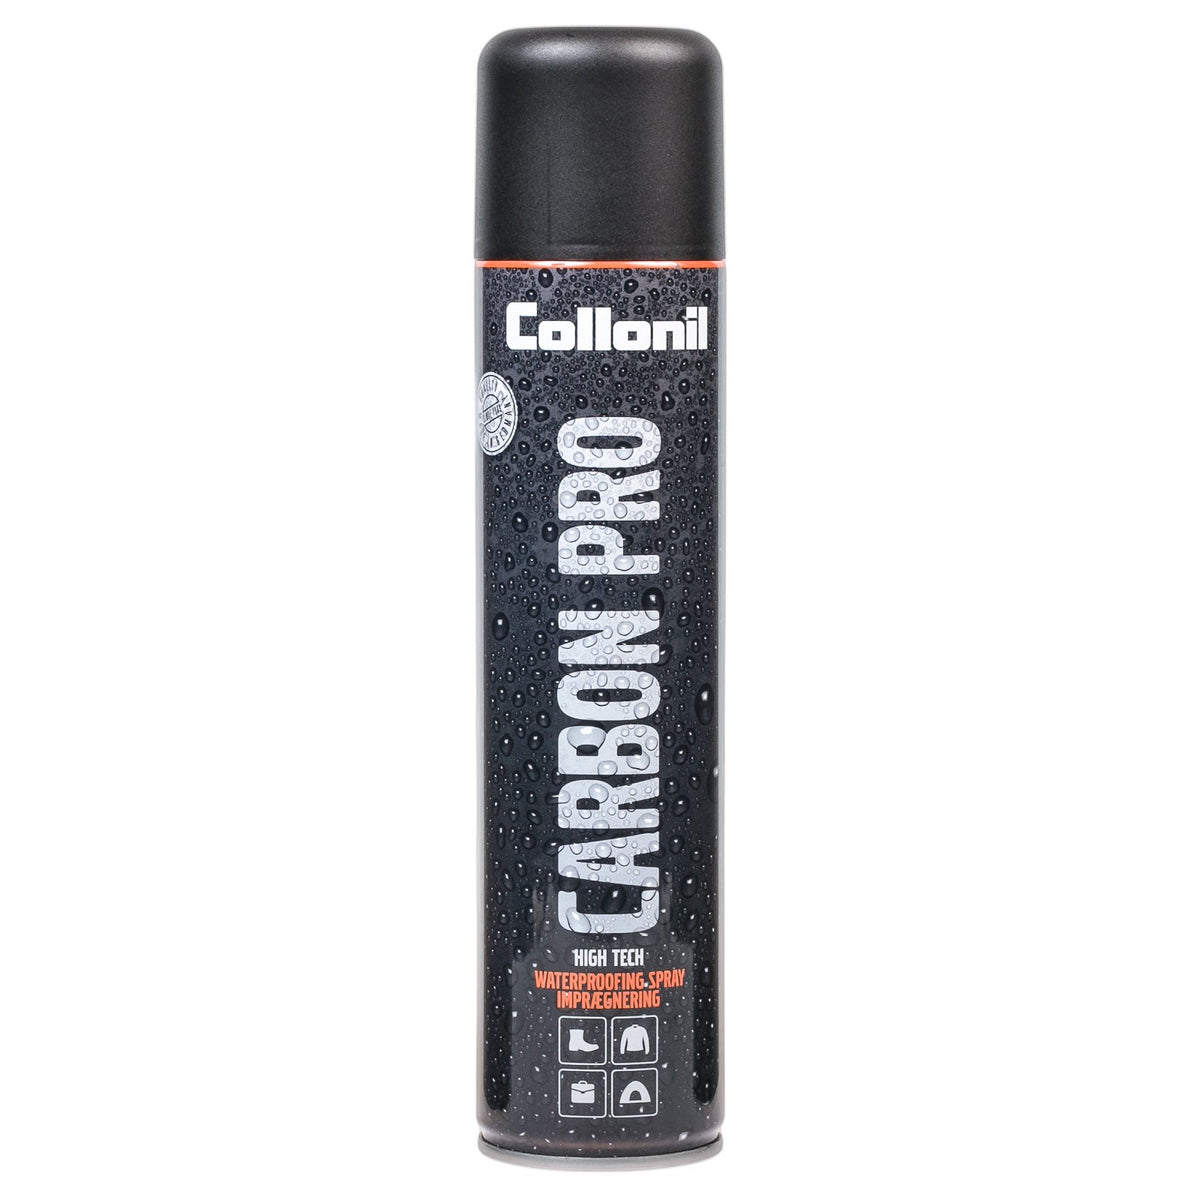 Carbon Pro - moisture protection, 300 ml